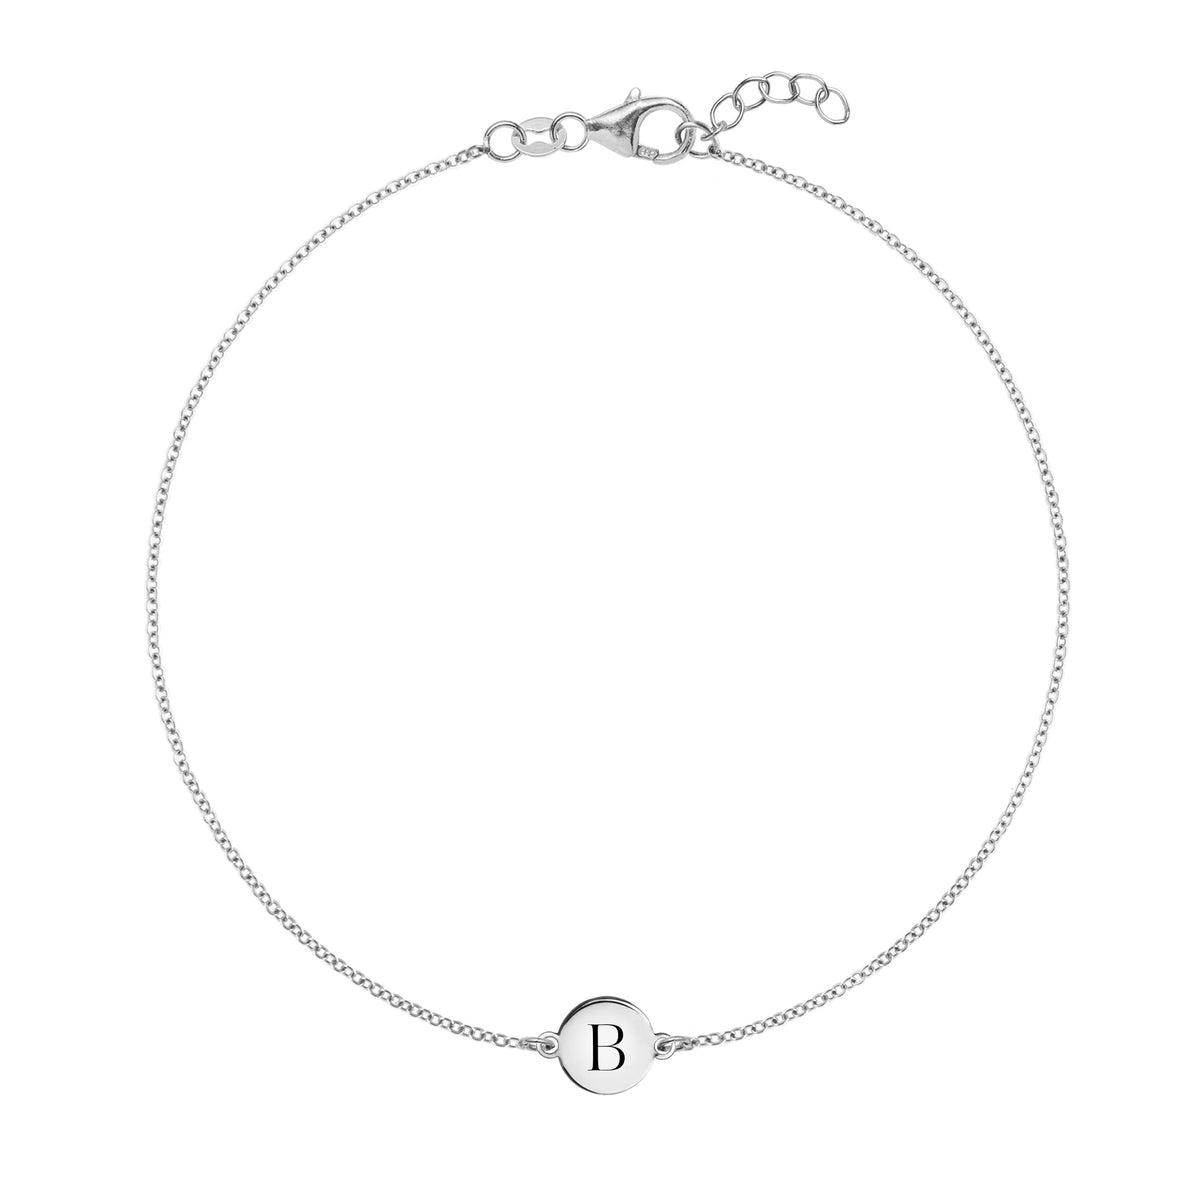 Grau letter B bracelet - Online jewelry Grau